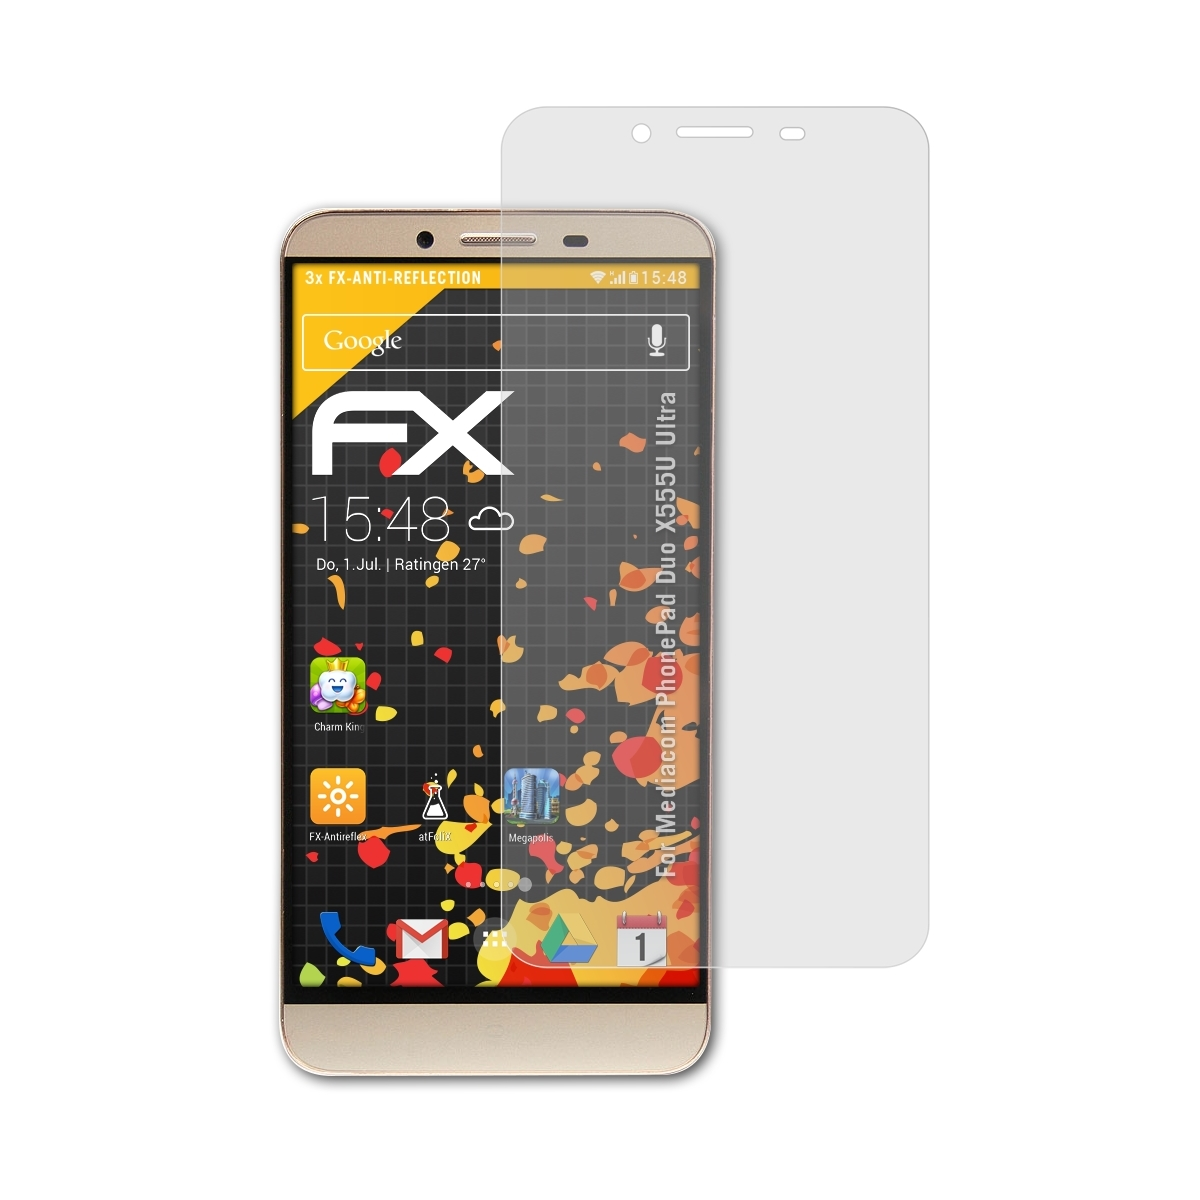 ATFOLIX 3x FX-Antireflex Displayschutz(für Mediacom PhonePad Duo X555U Ultra)